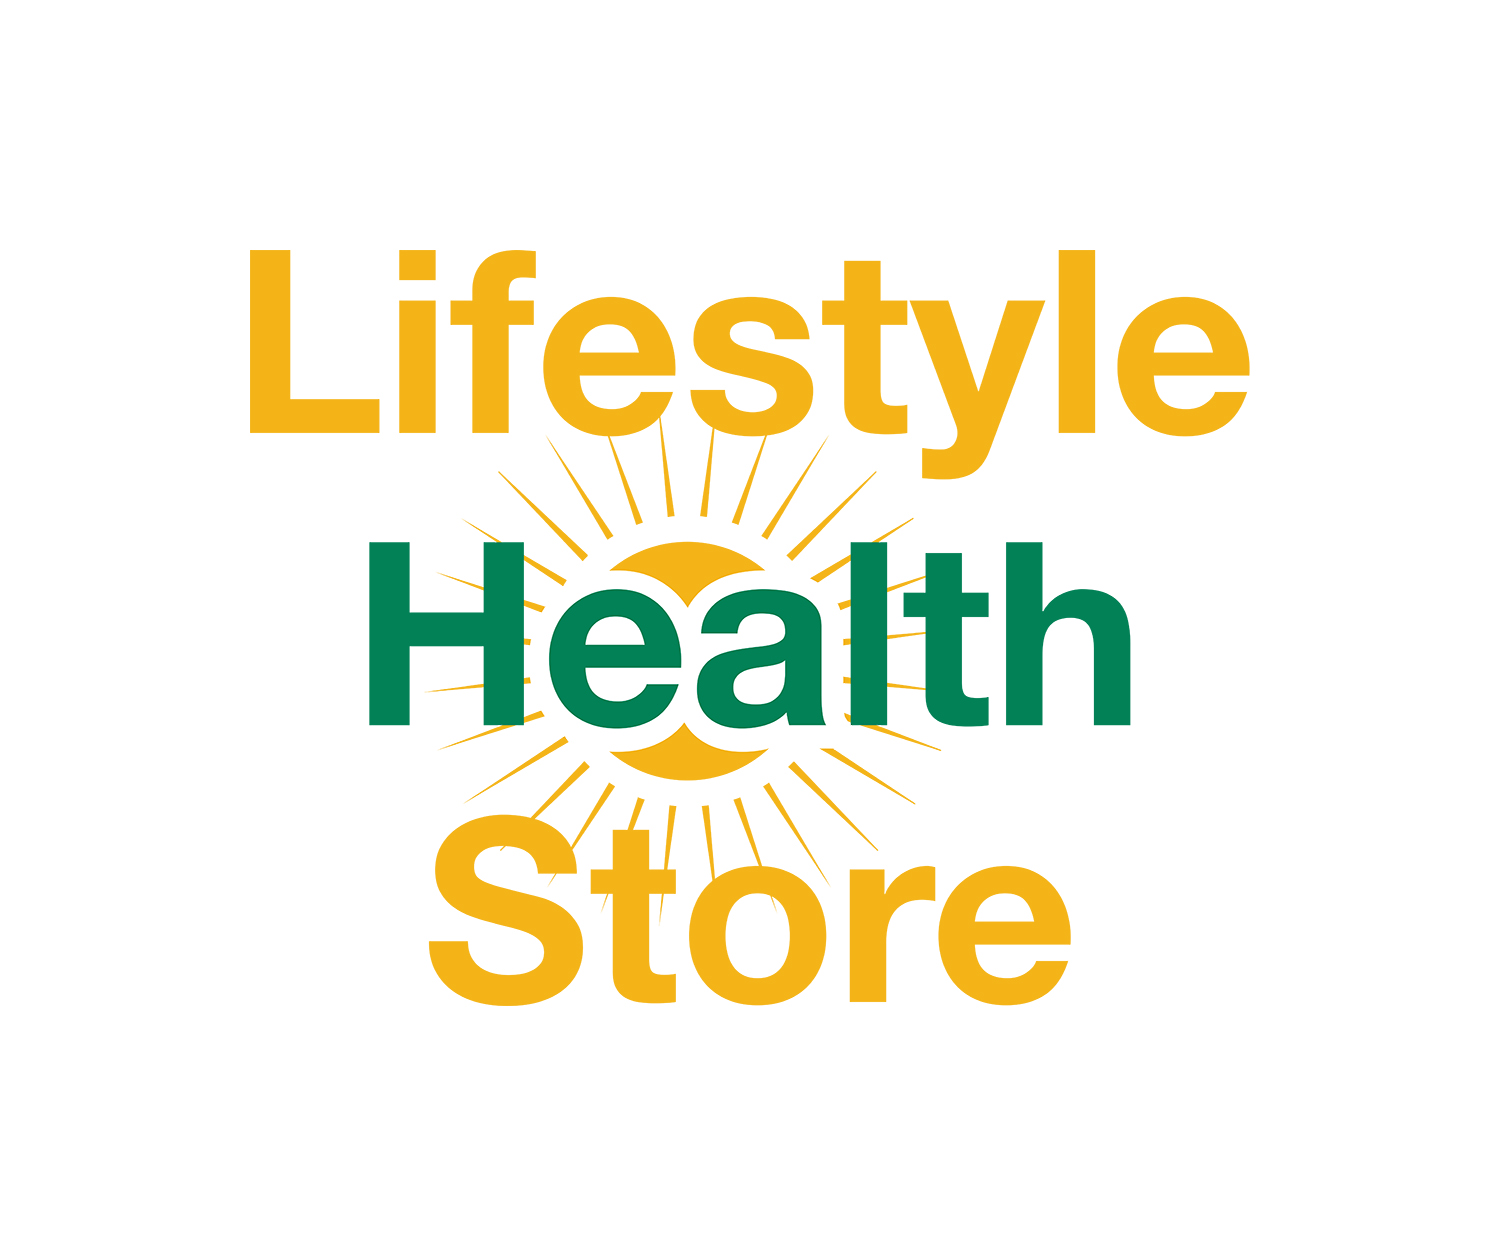 Lifestyle Health Store